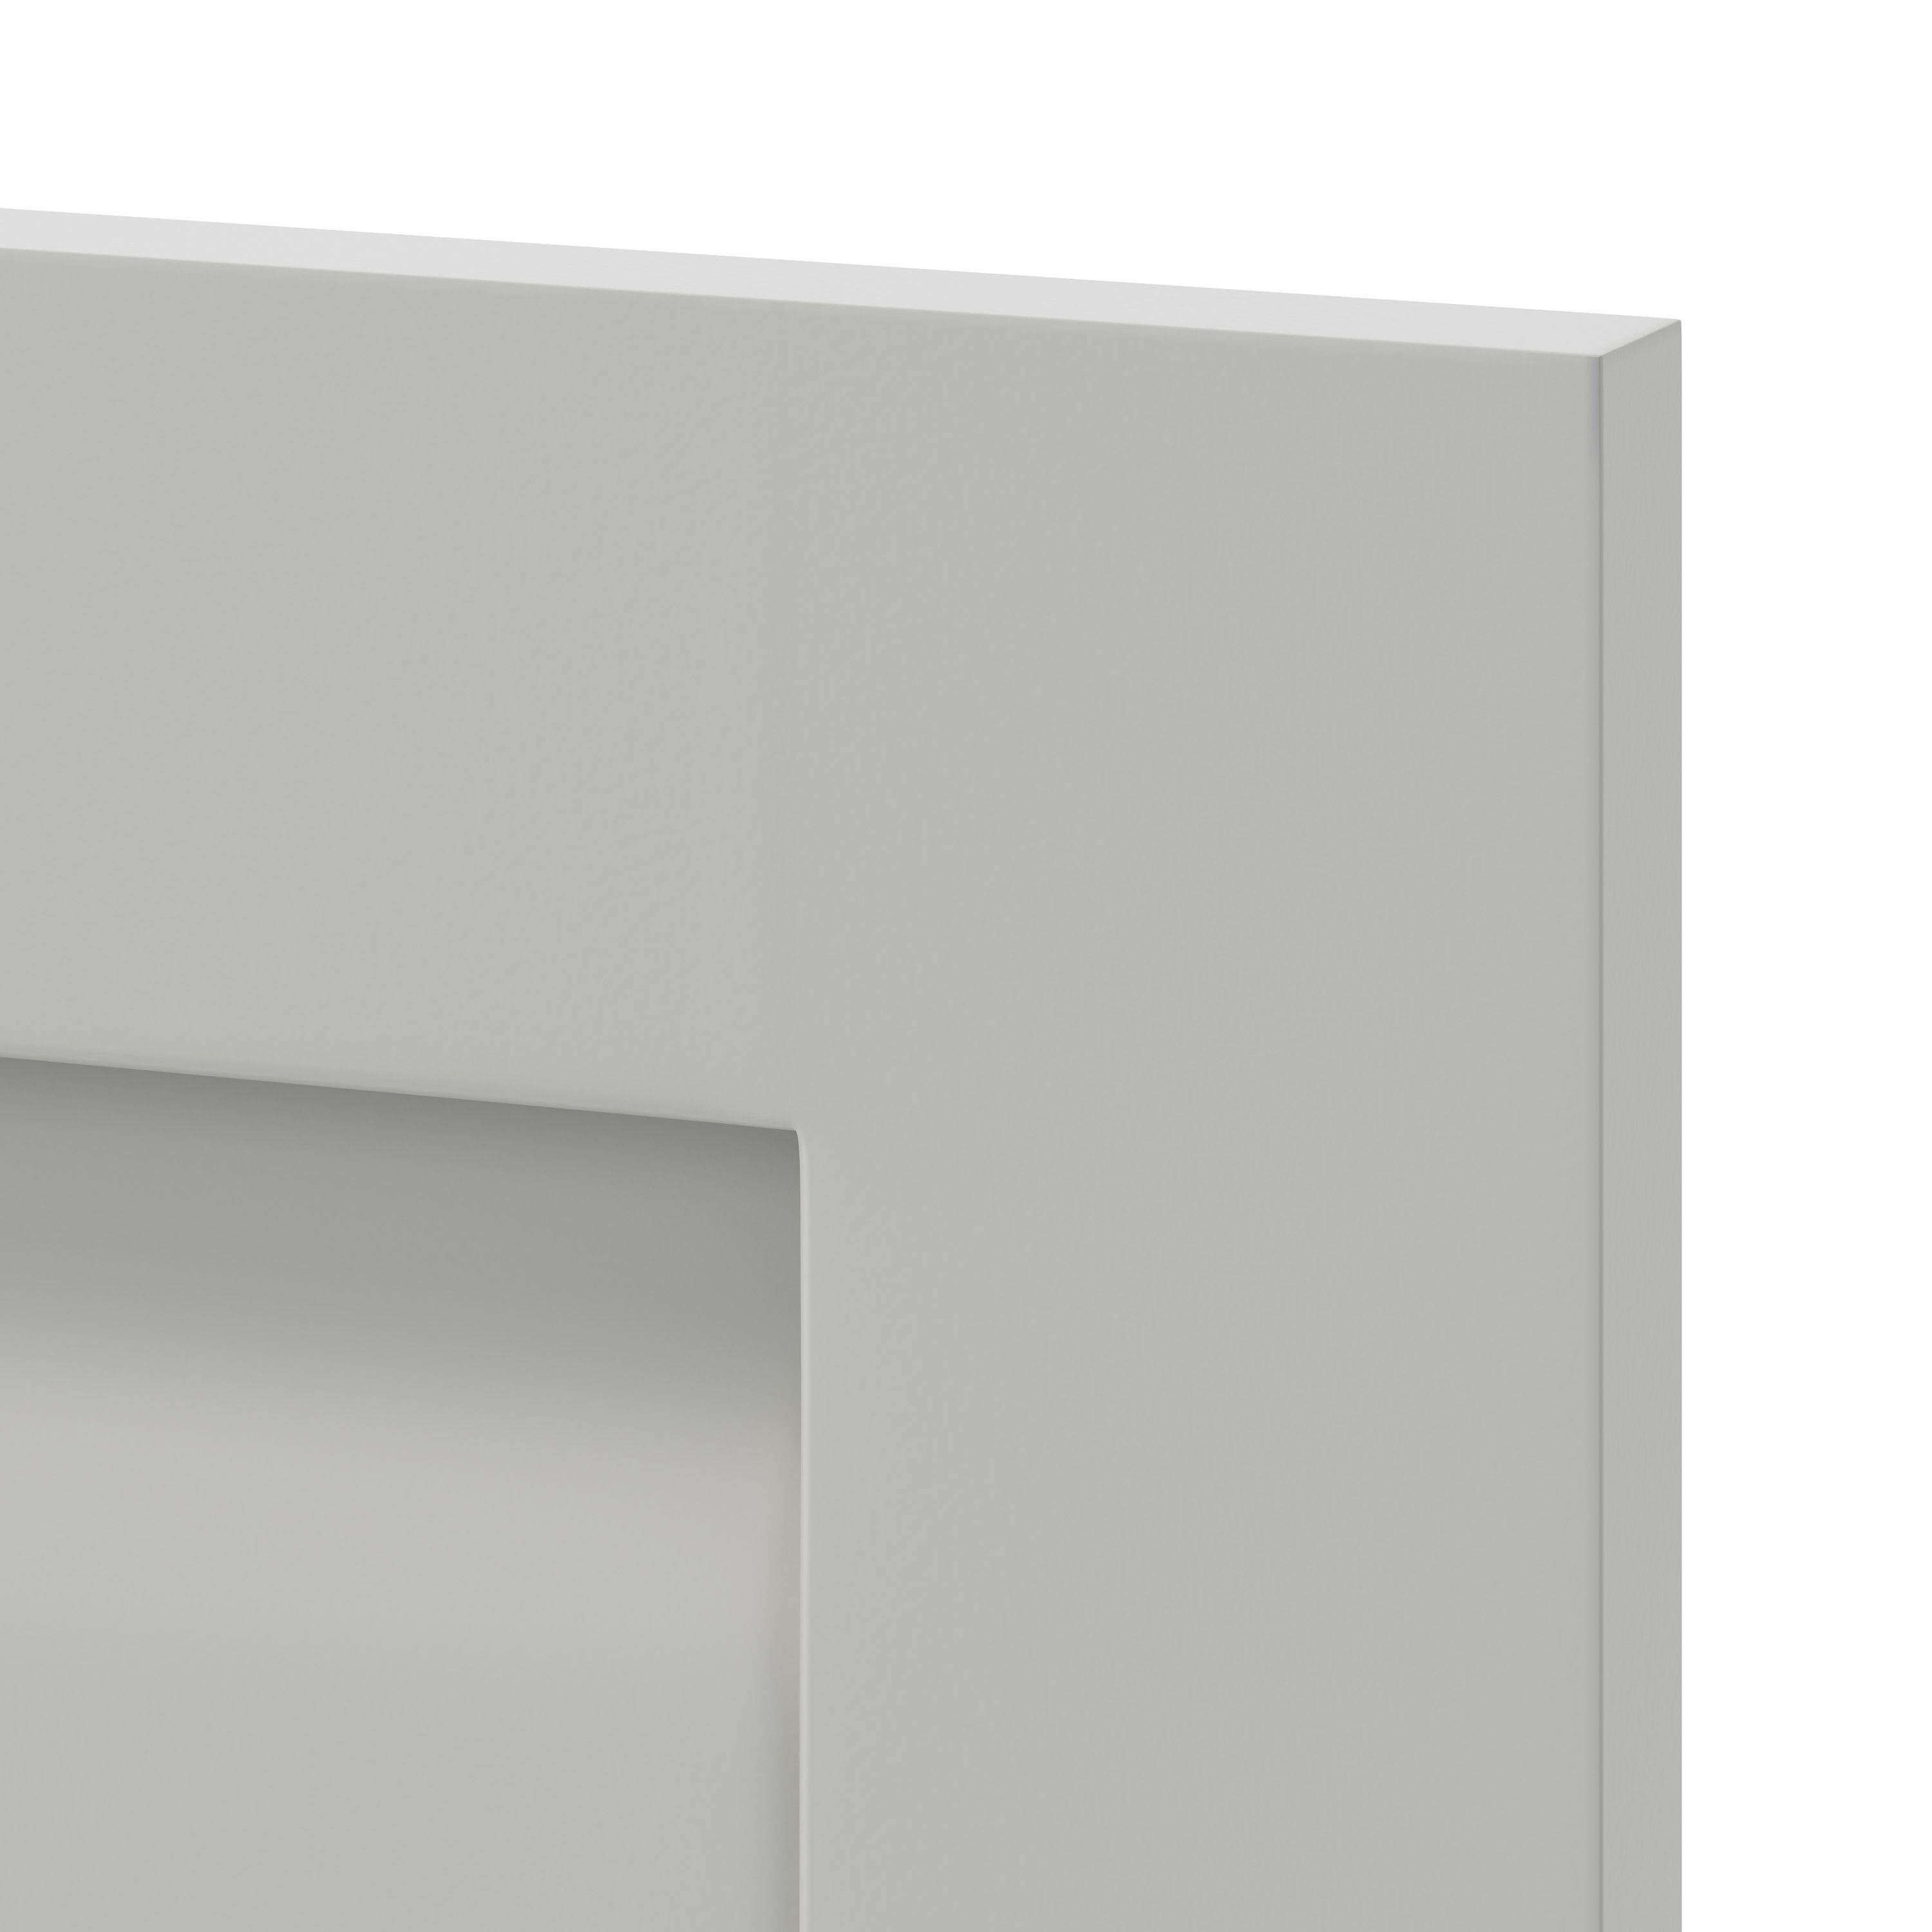 GoodHome Garcinia Matt stone integrated handle shaker 50:50 Larder Cabinet door (W)600mm (H)1001mm (T)20mm